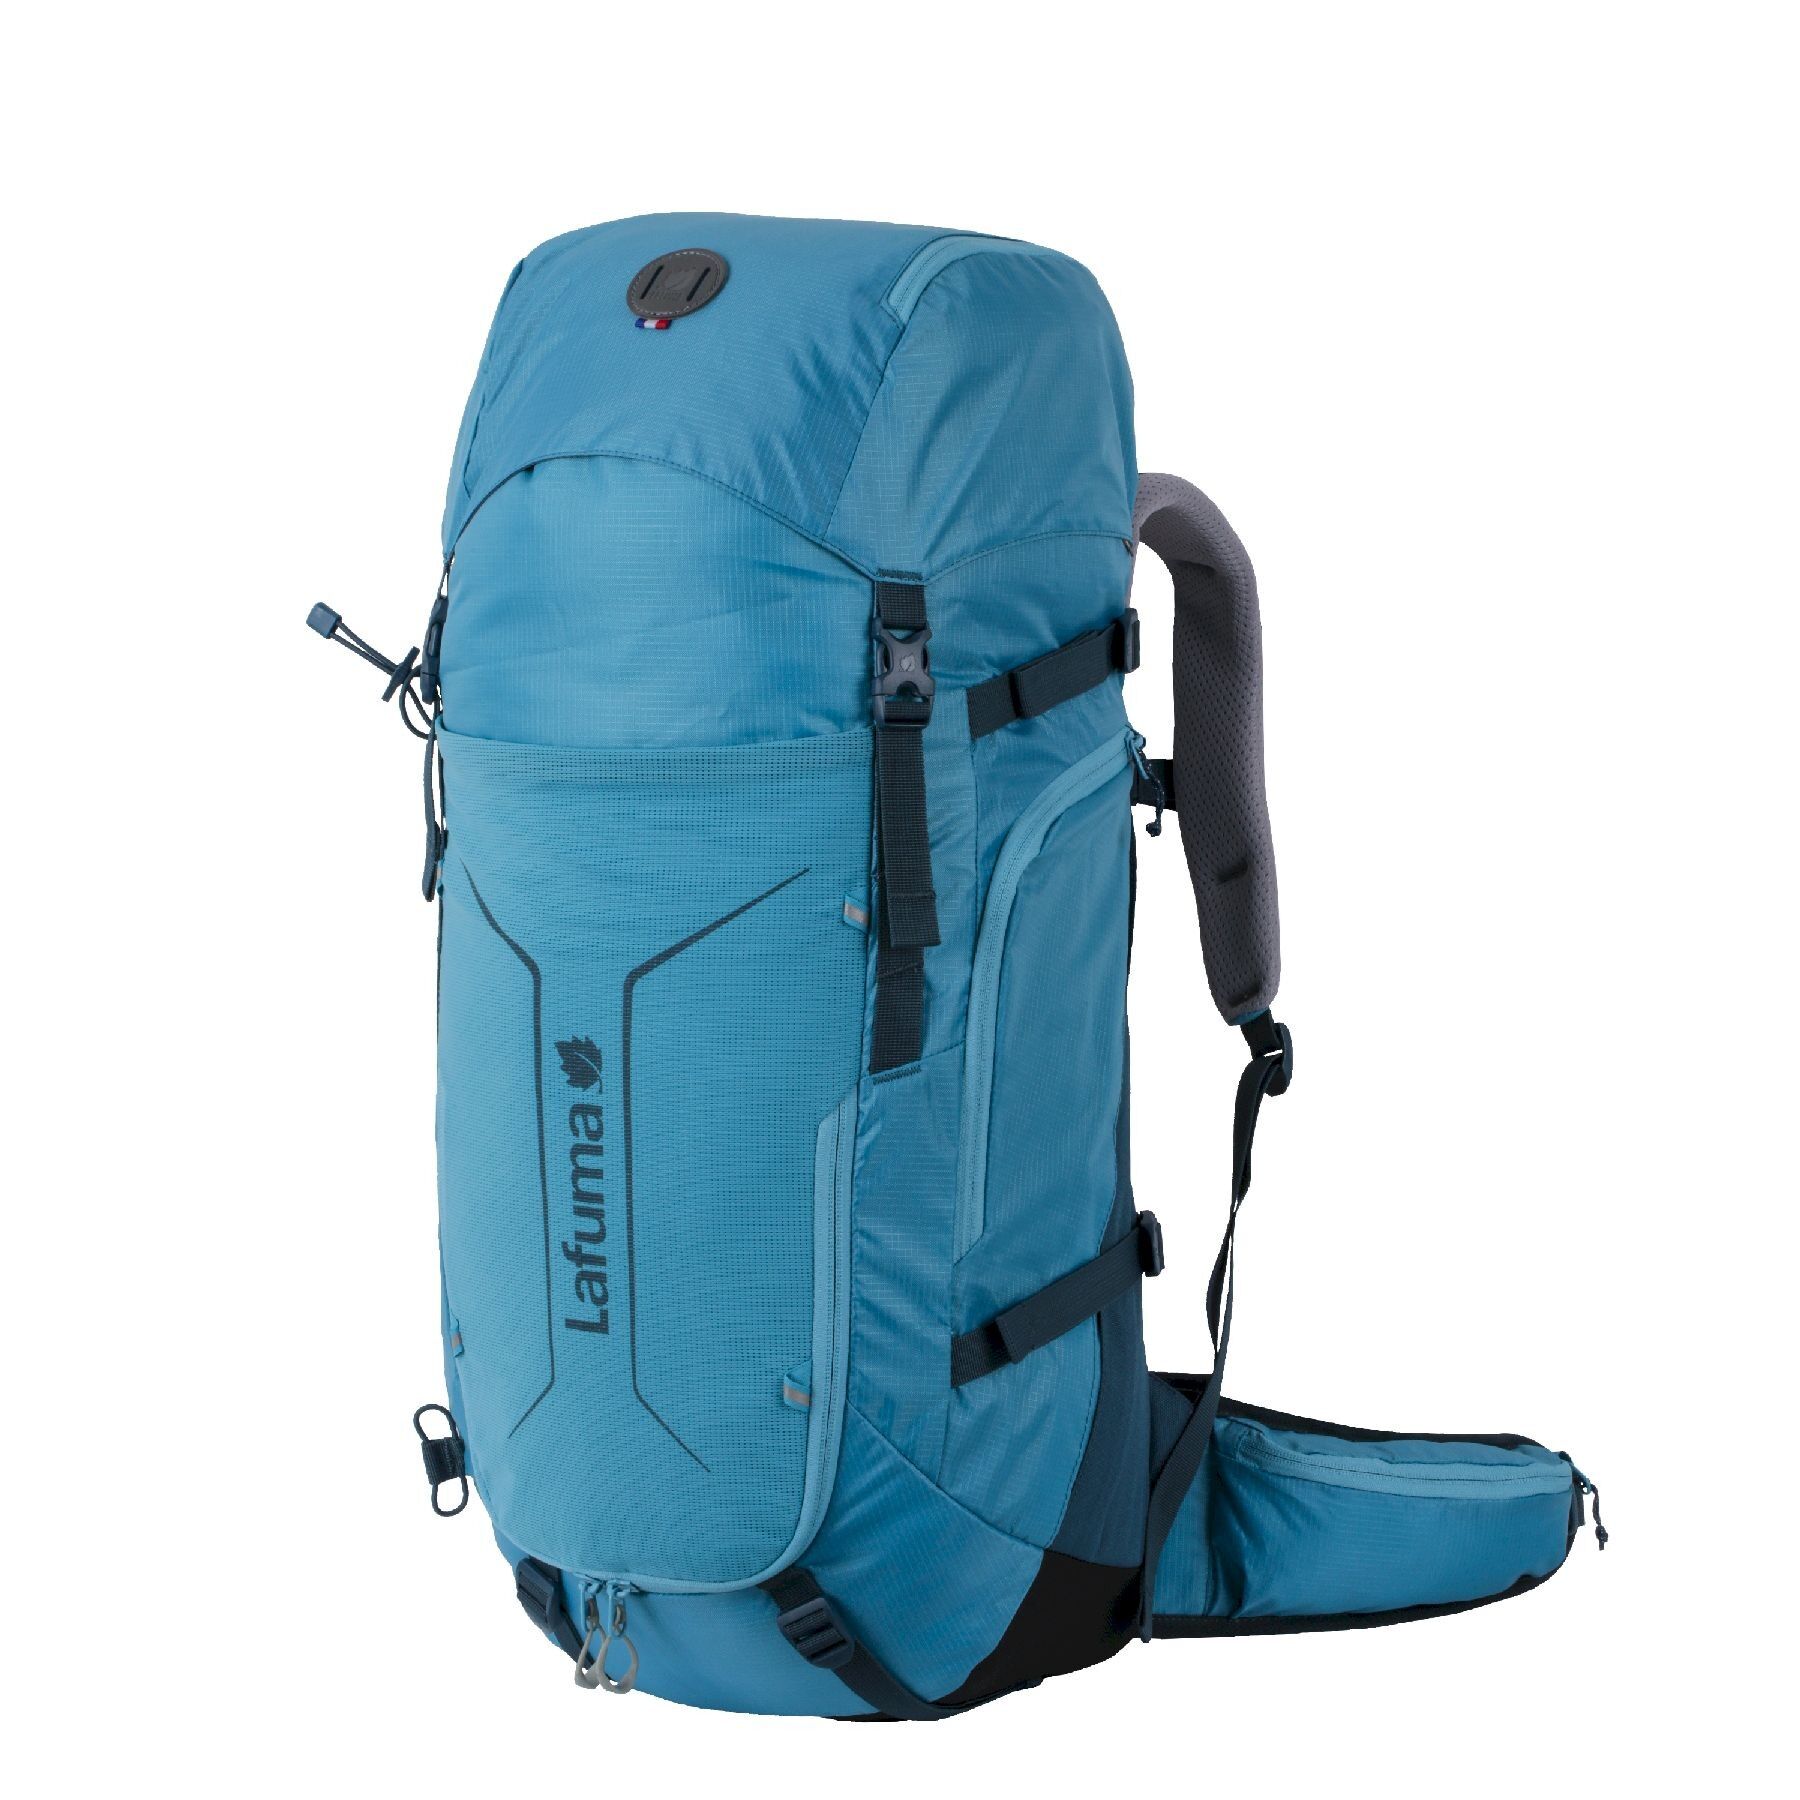 Lafuma Access 40 - Hiking backpack - Women's